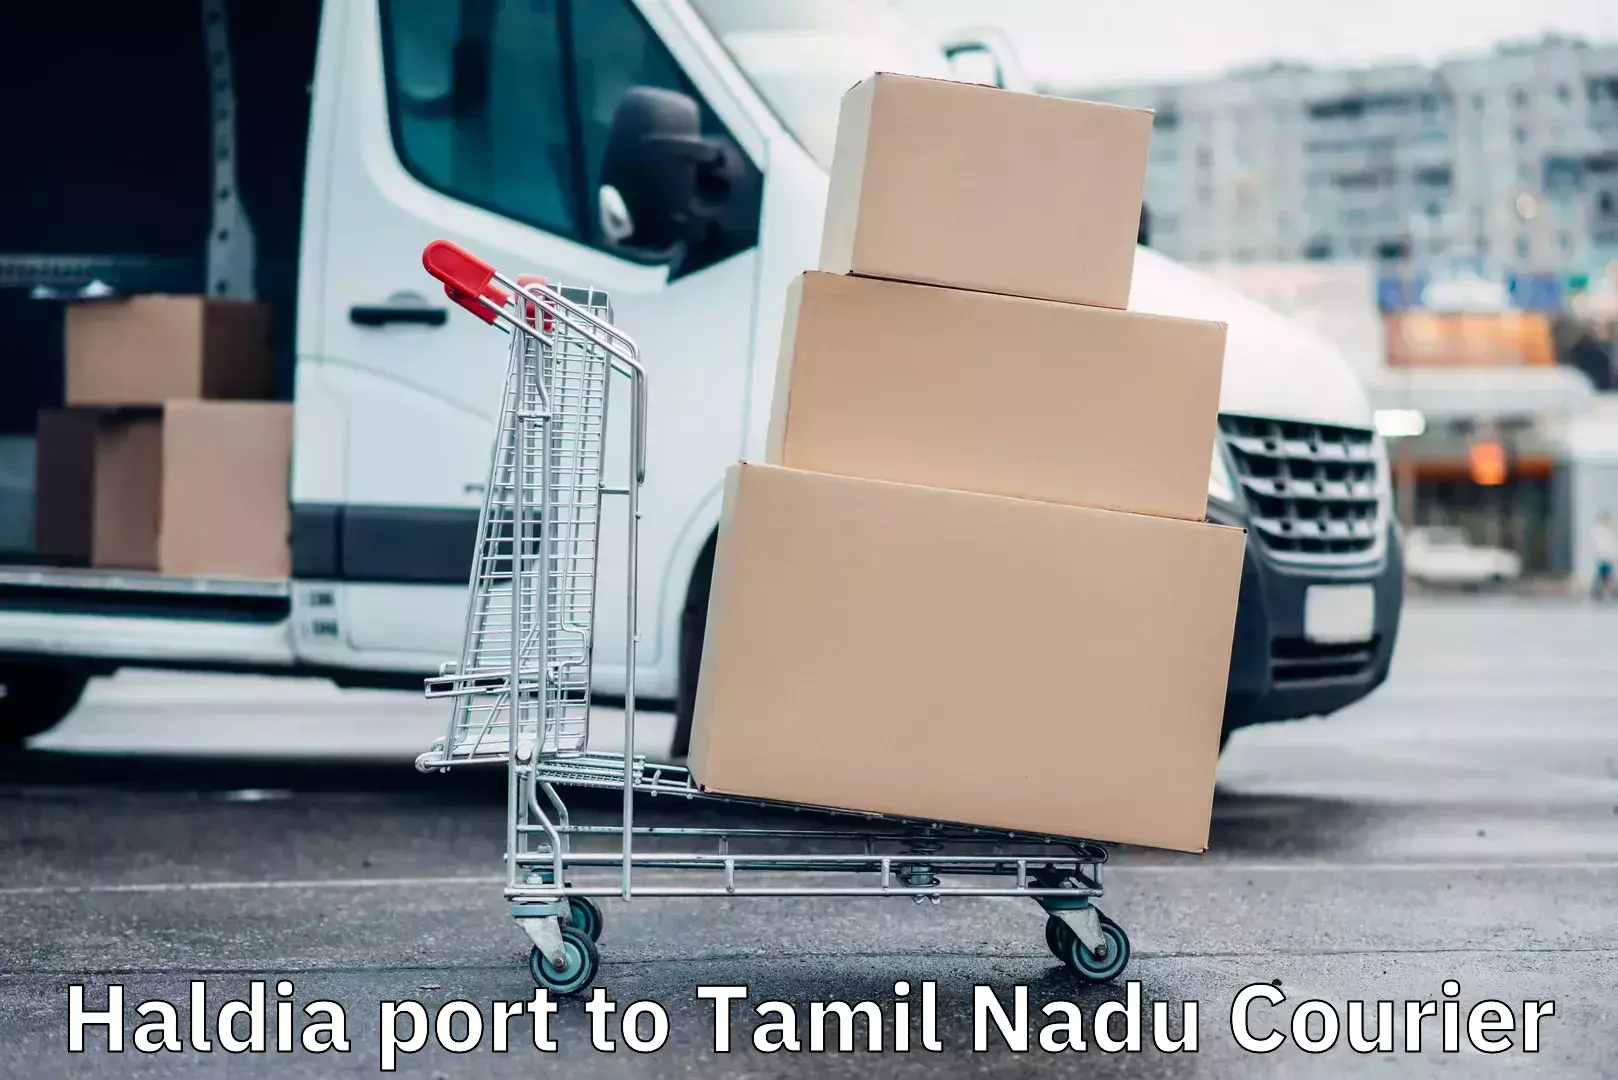 Efficient parcel tracking Haldia port to Tamil Nadu